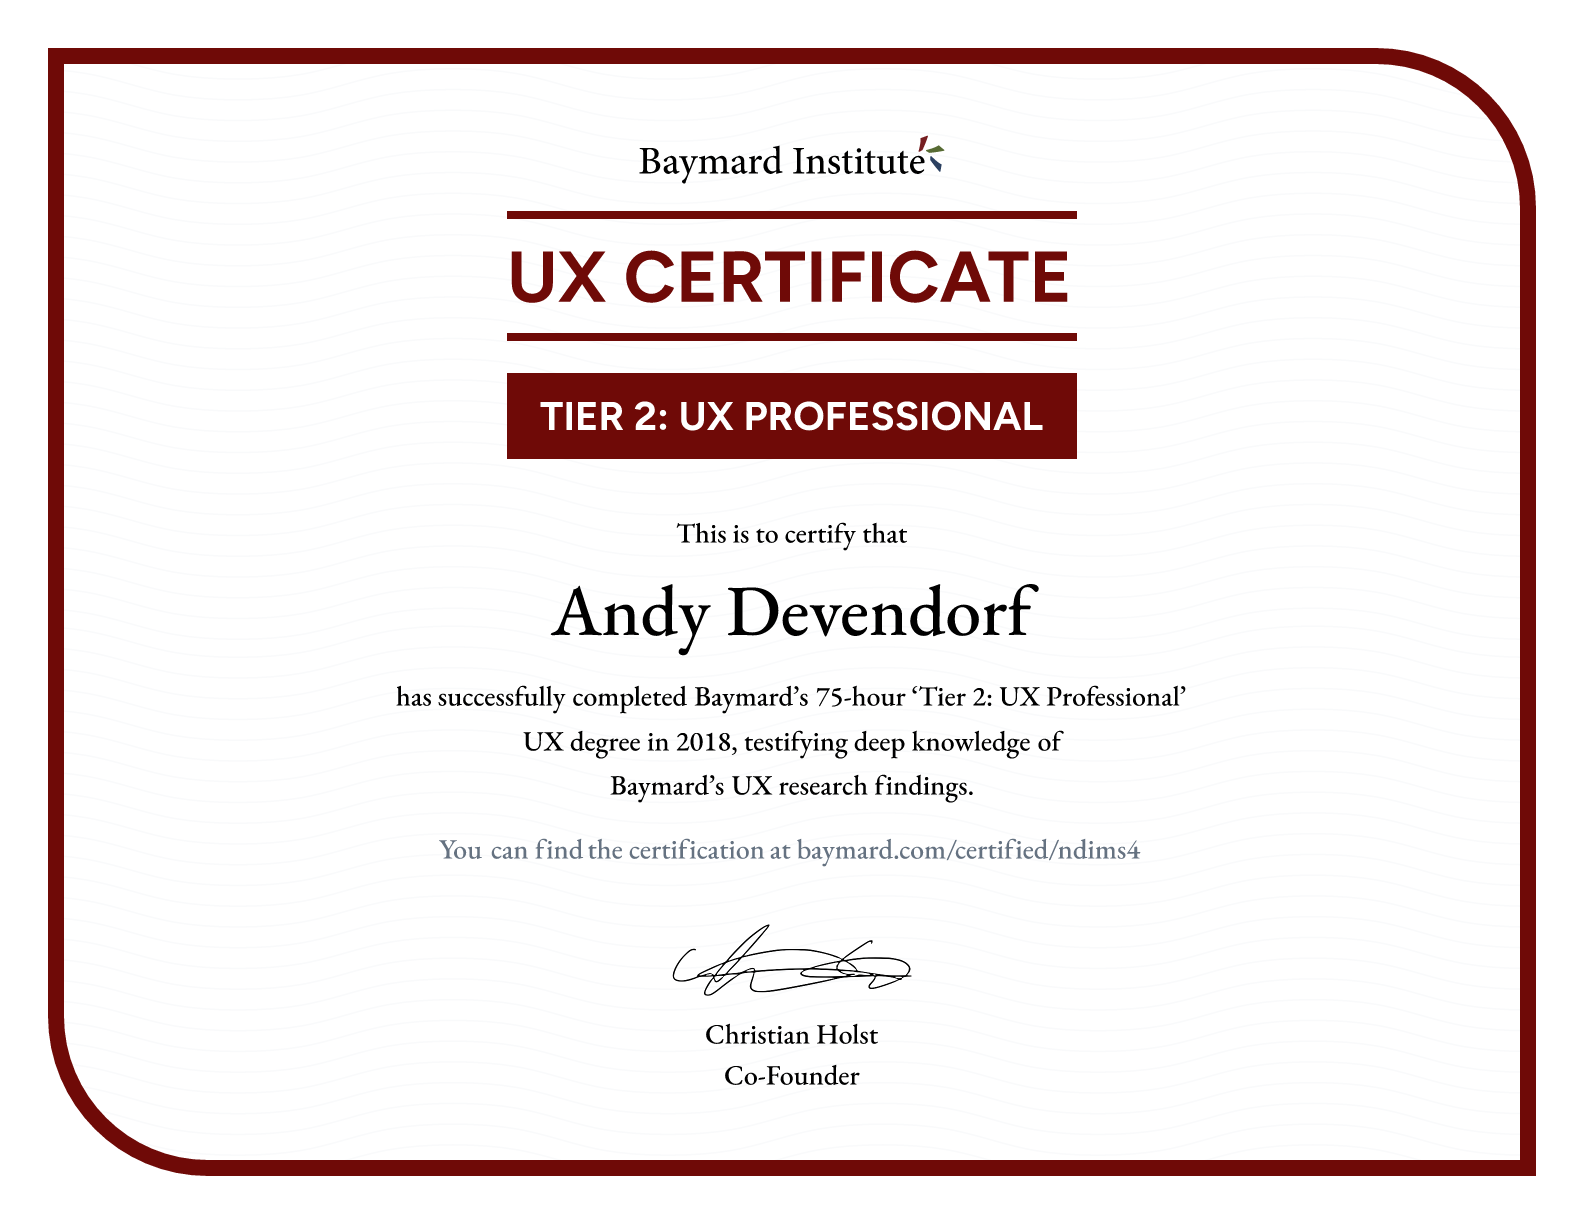 Andy Devendorf’s certificate